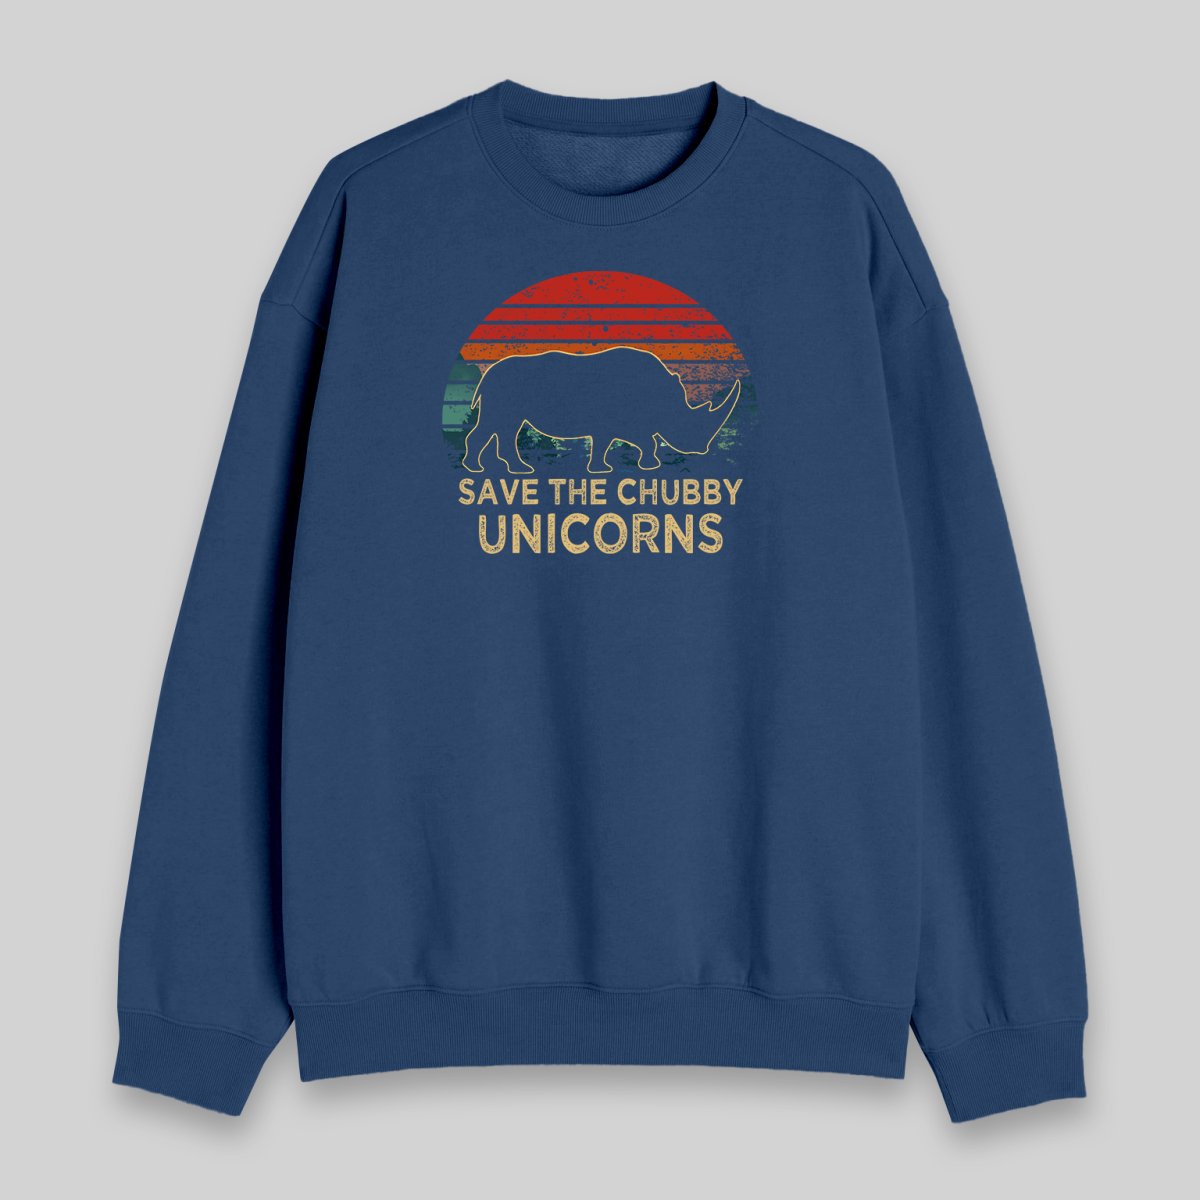 Save The Chubby Unicorns Sweatshirt - Geeksoutfit